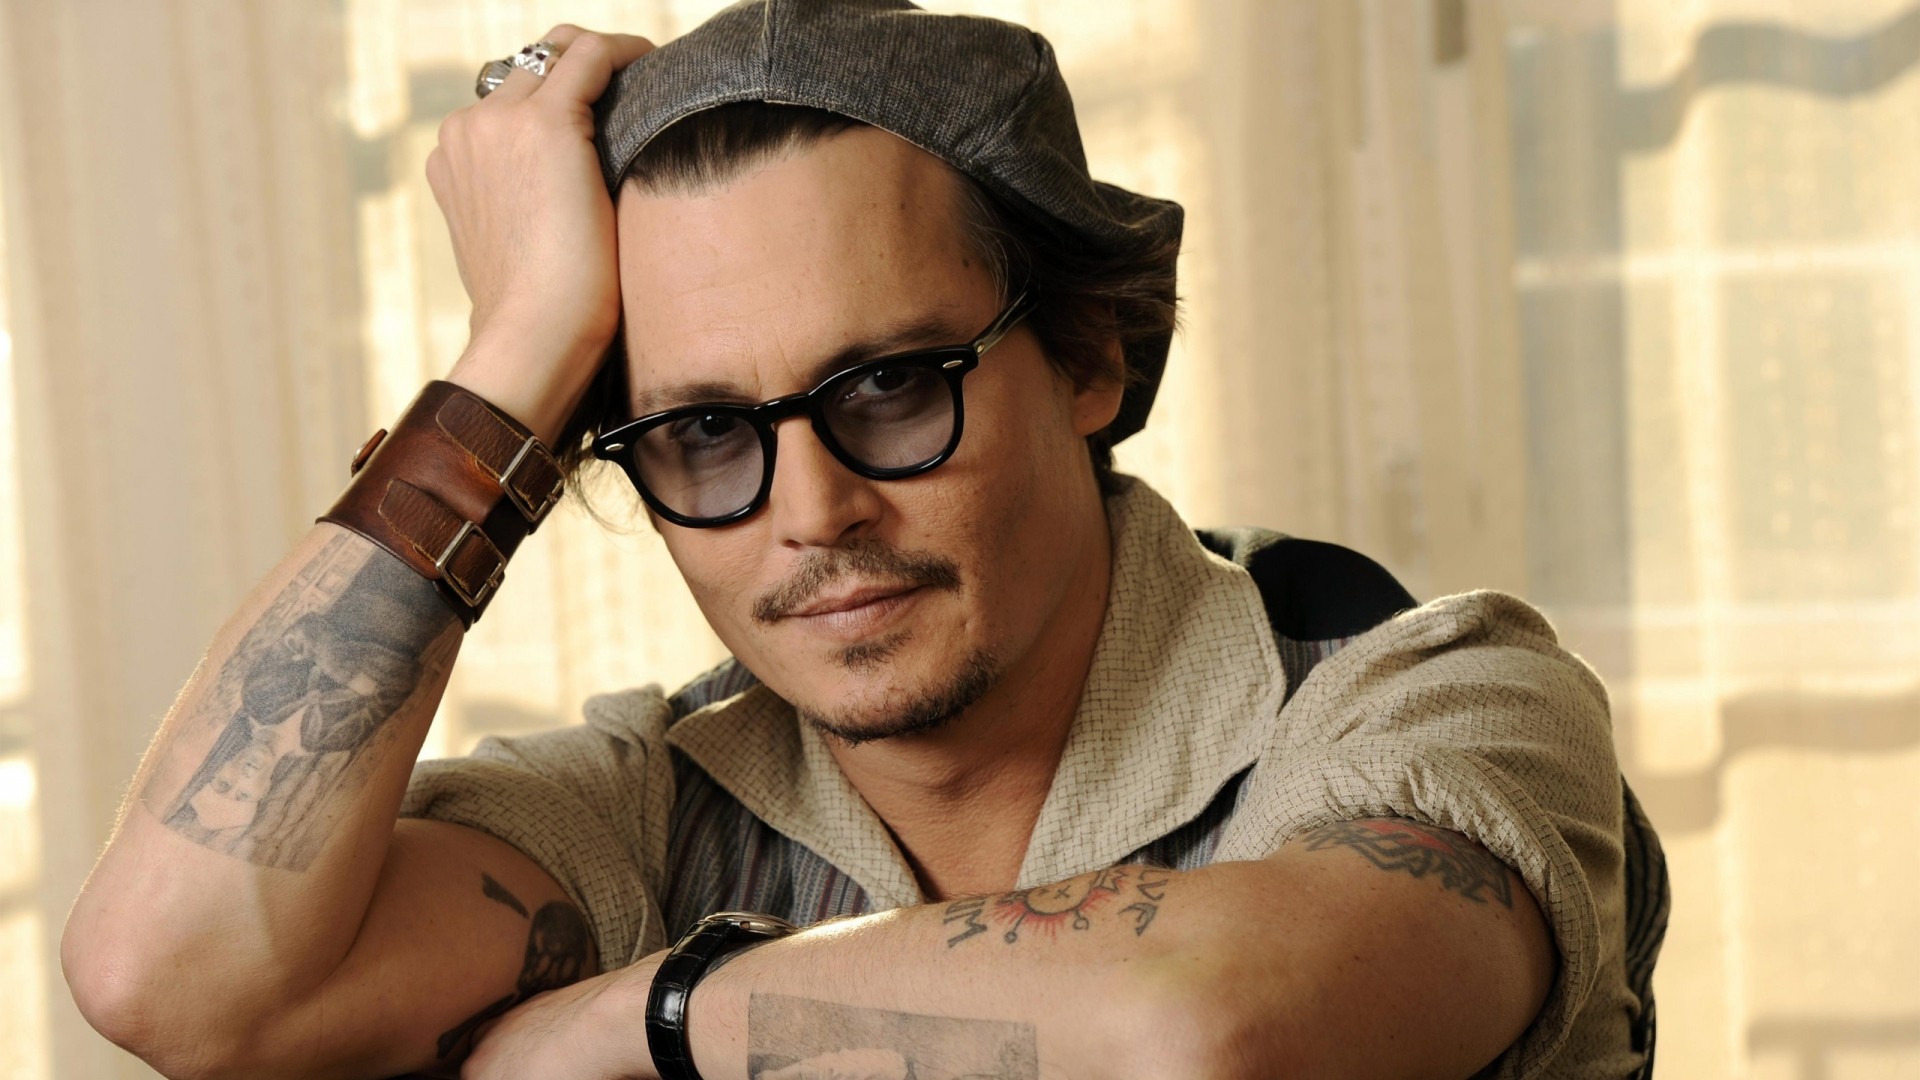 4000x4000 Resolution Johnny Depp In Specs wallpapers 4000x4000 ...